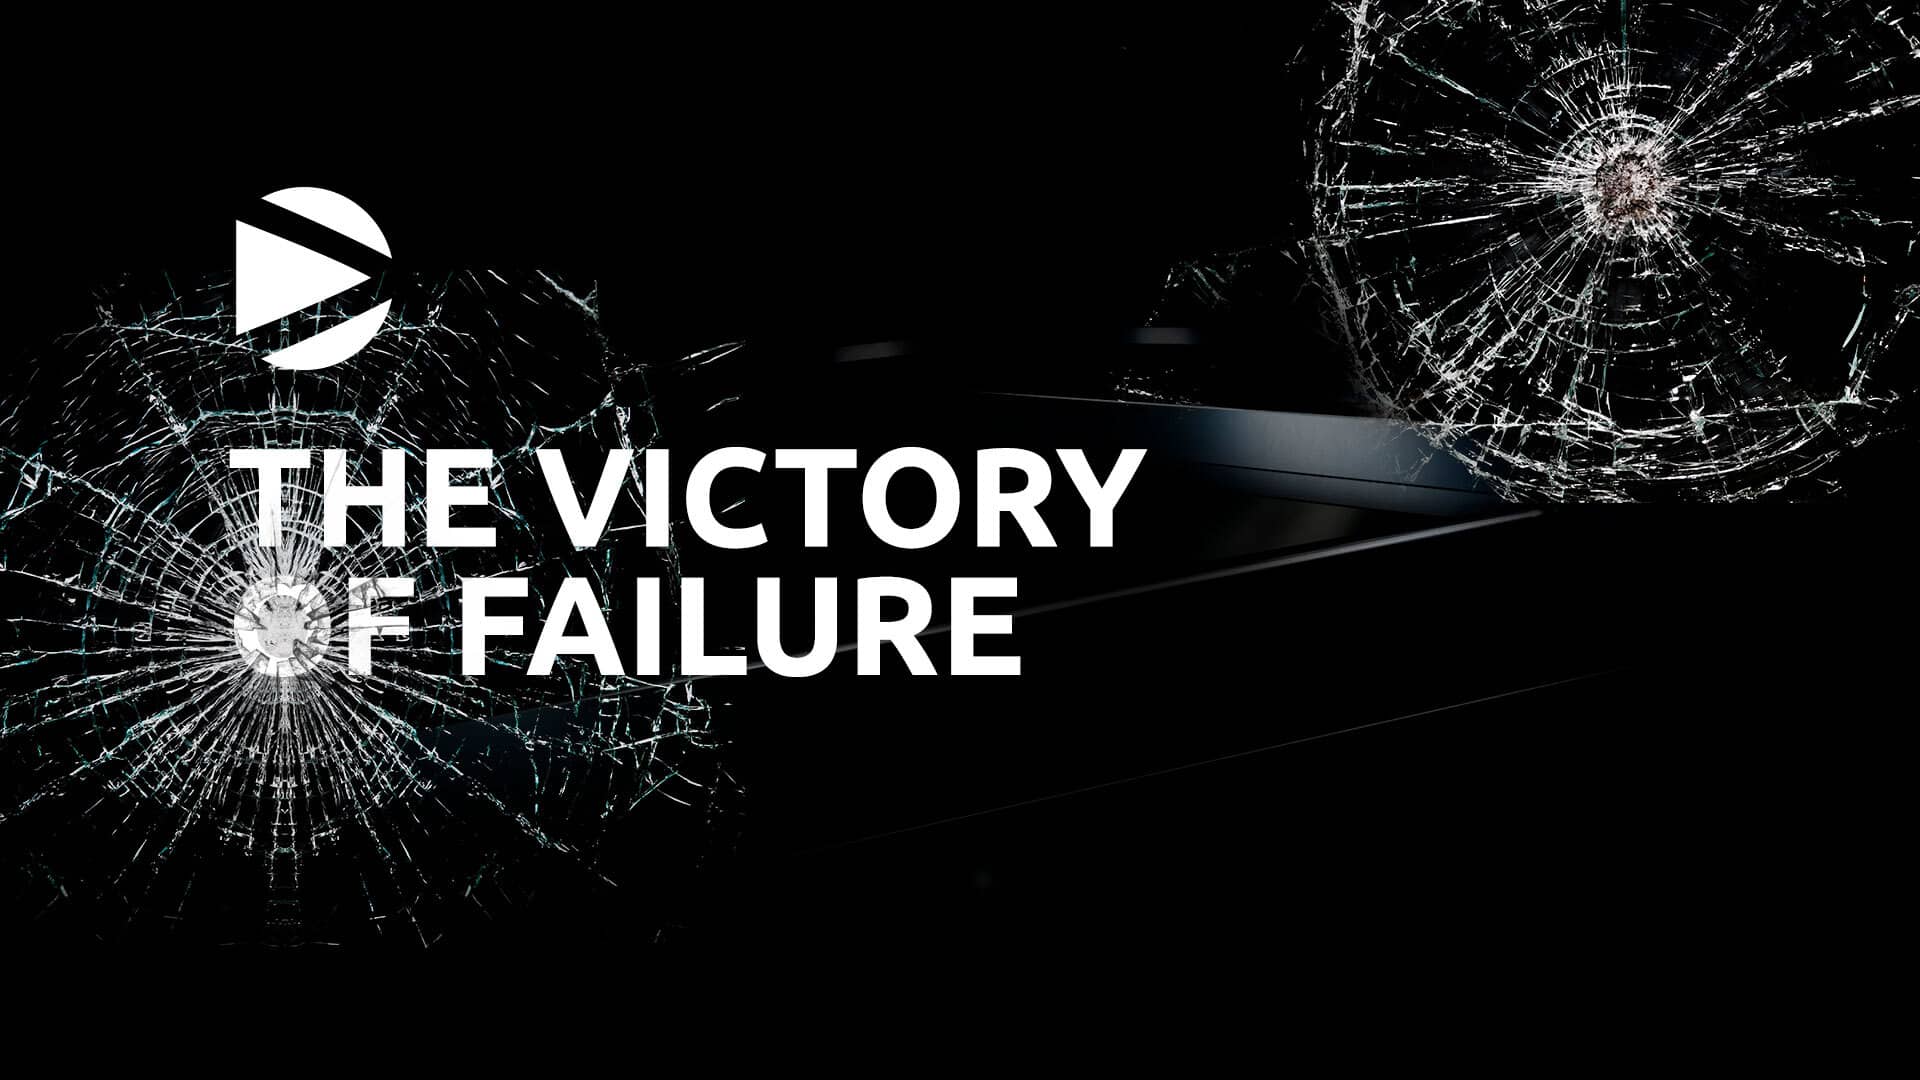 The Victory of failure - Broken glass screen like gunshots